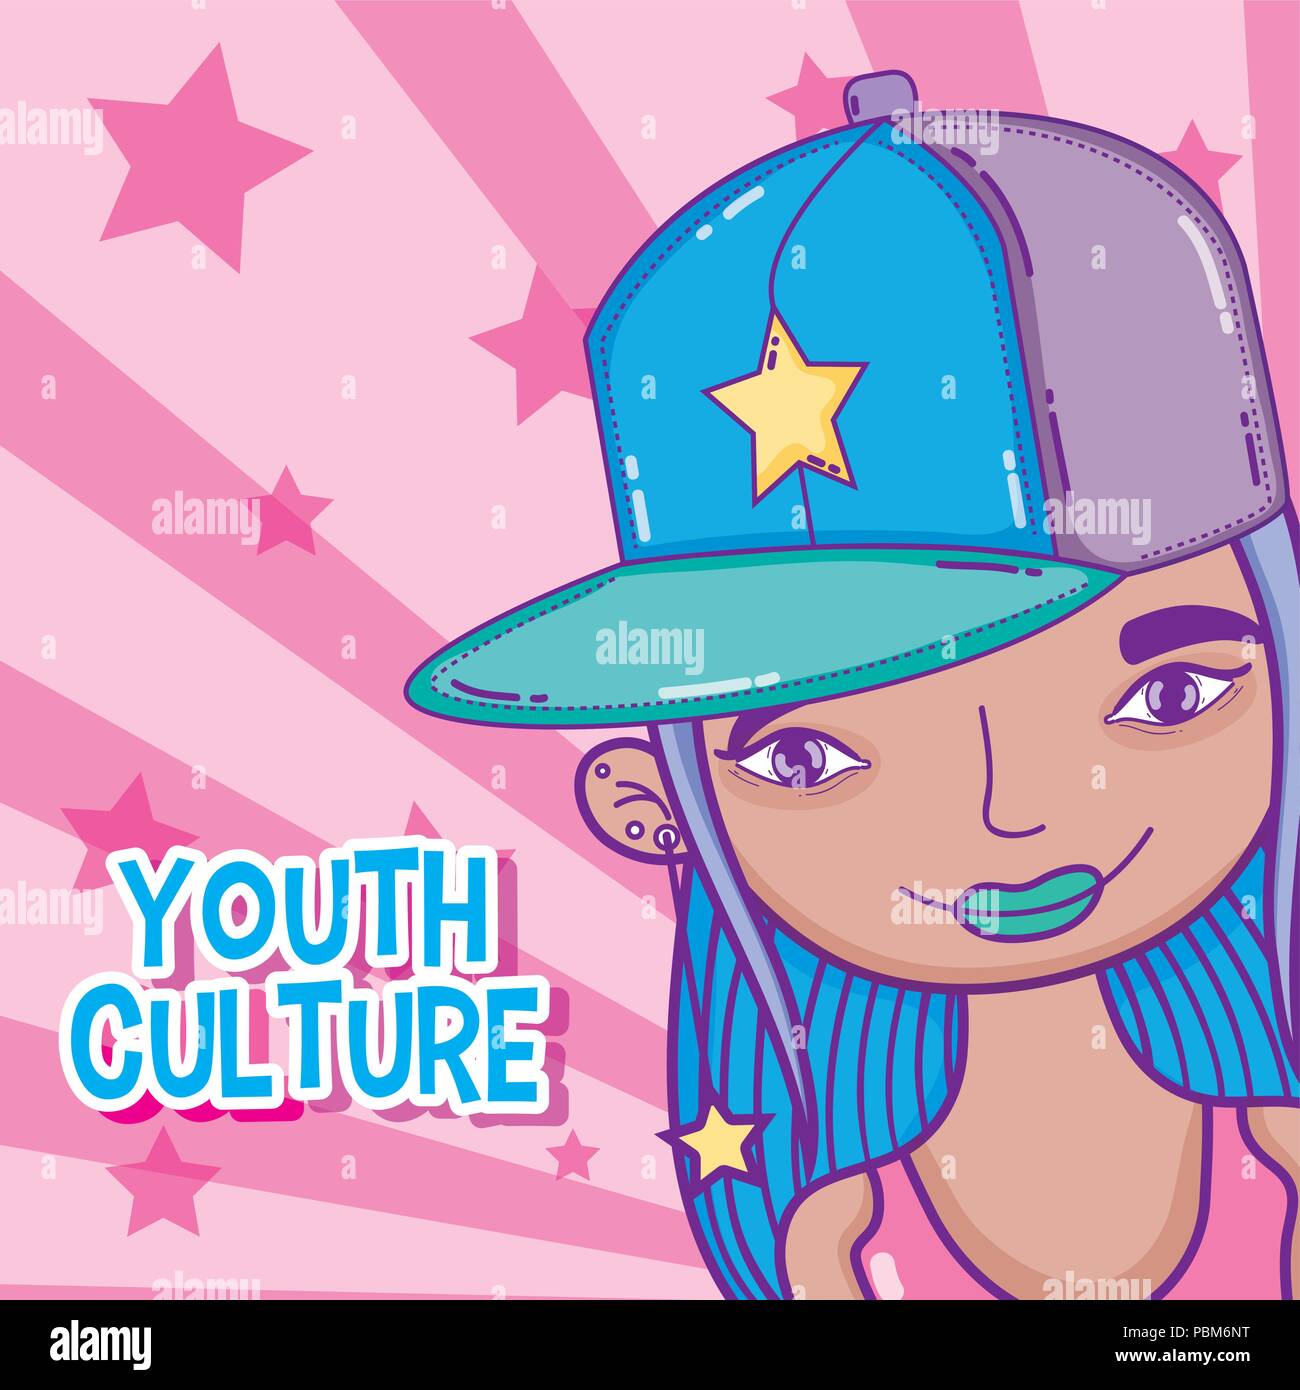 Youth culture cartoon Stock Vector